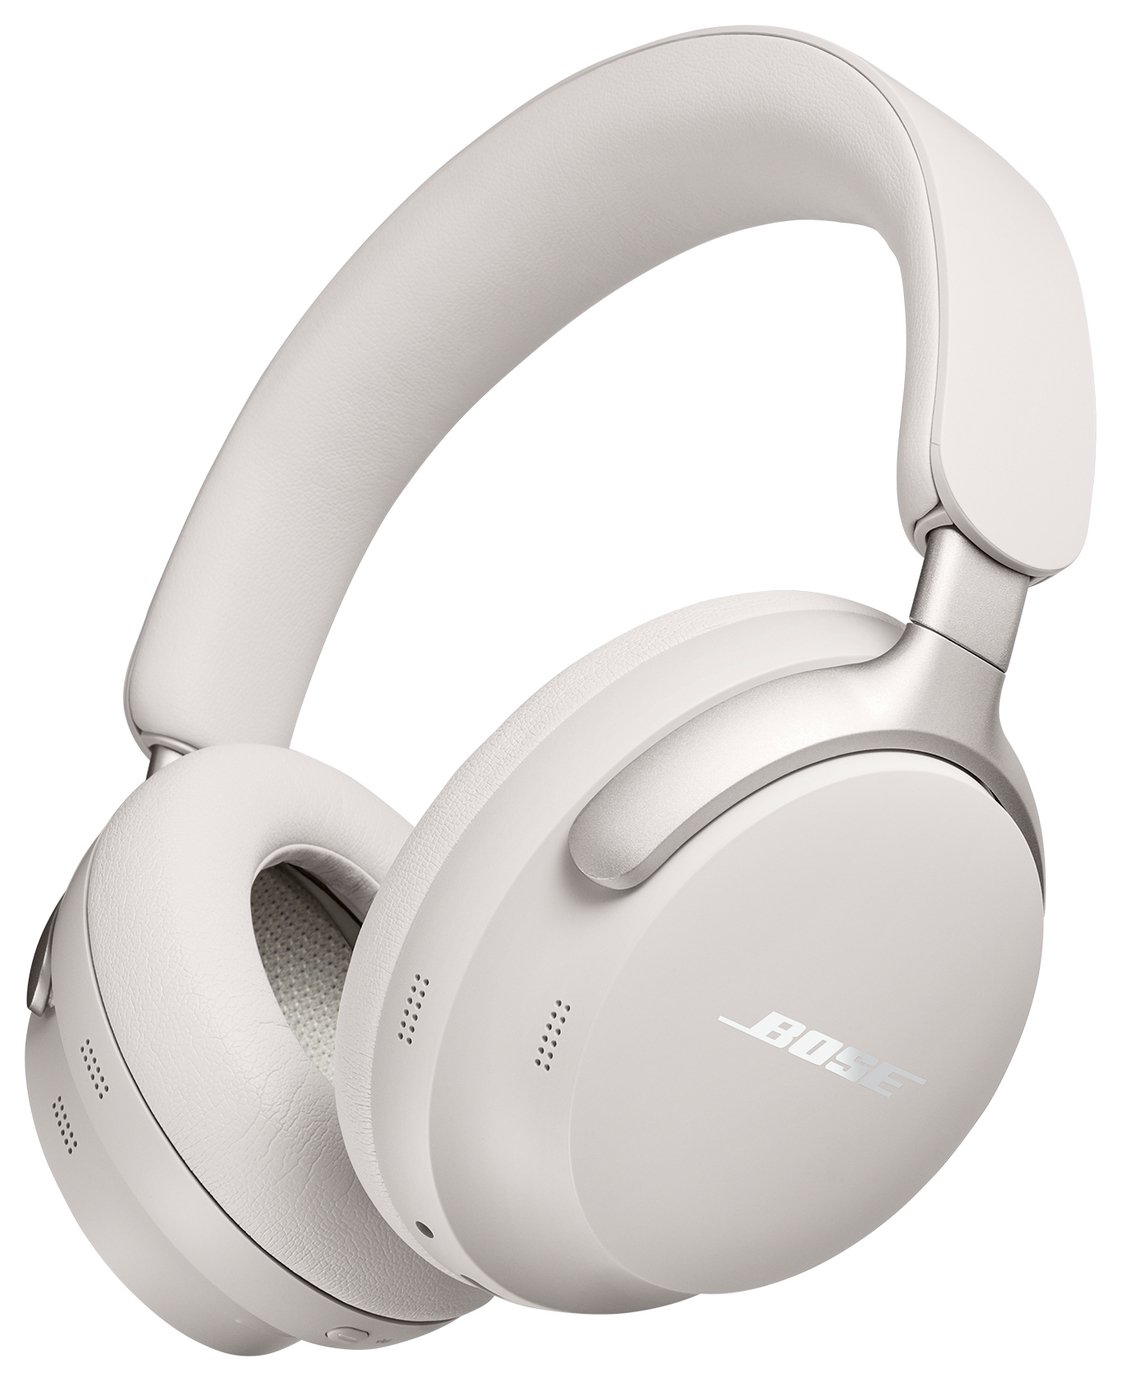 Bose QuietComfort Ultra Over-Ear Wireless Headphones - White